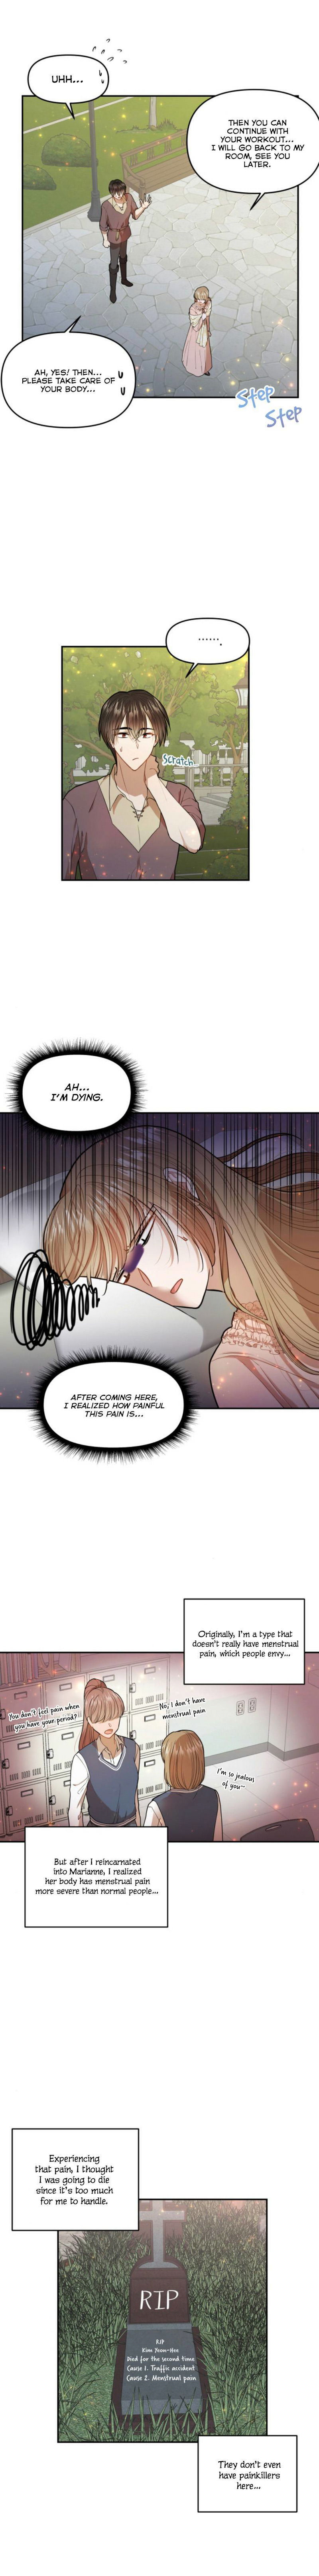 Romance Fantasy Comic Binge Chapter 3 page 10